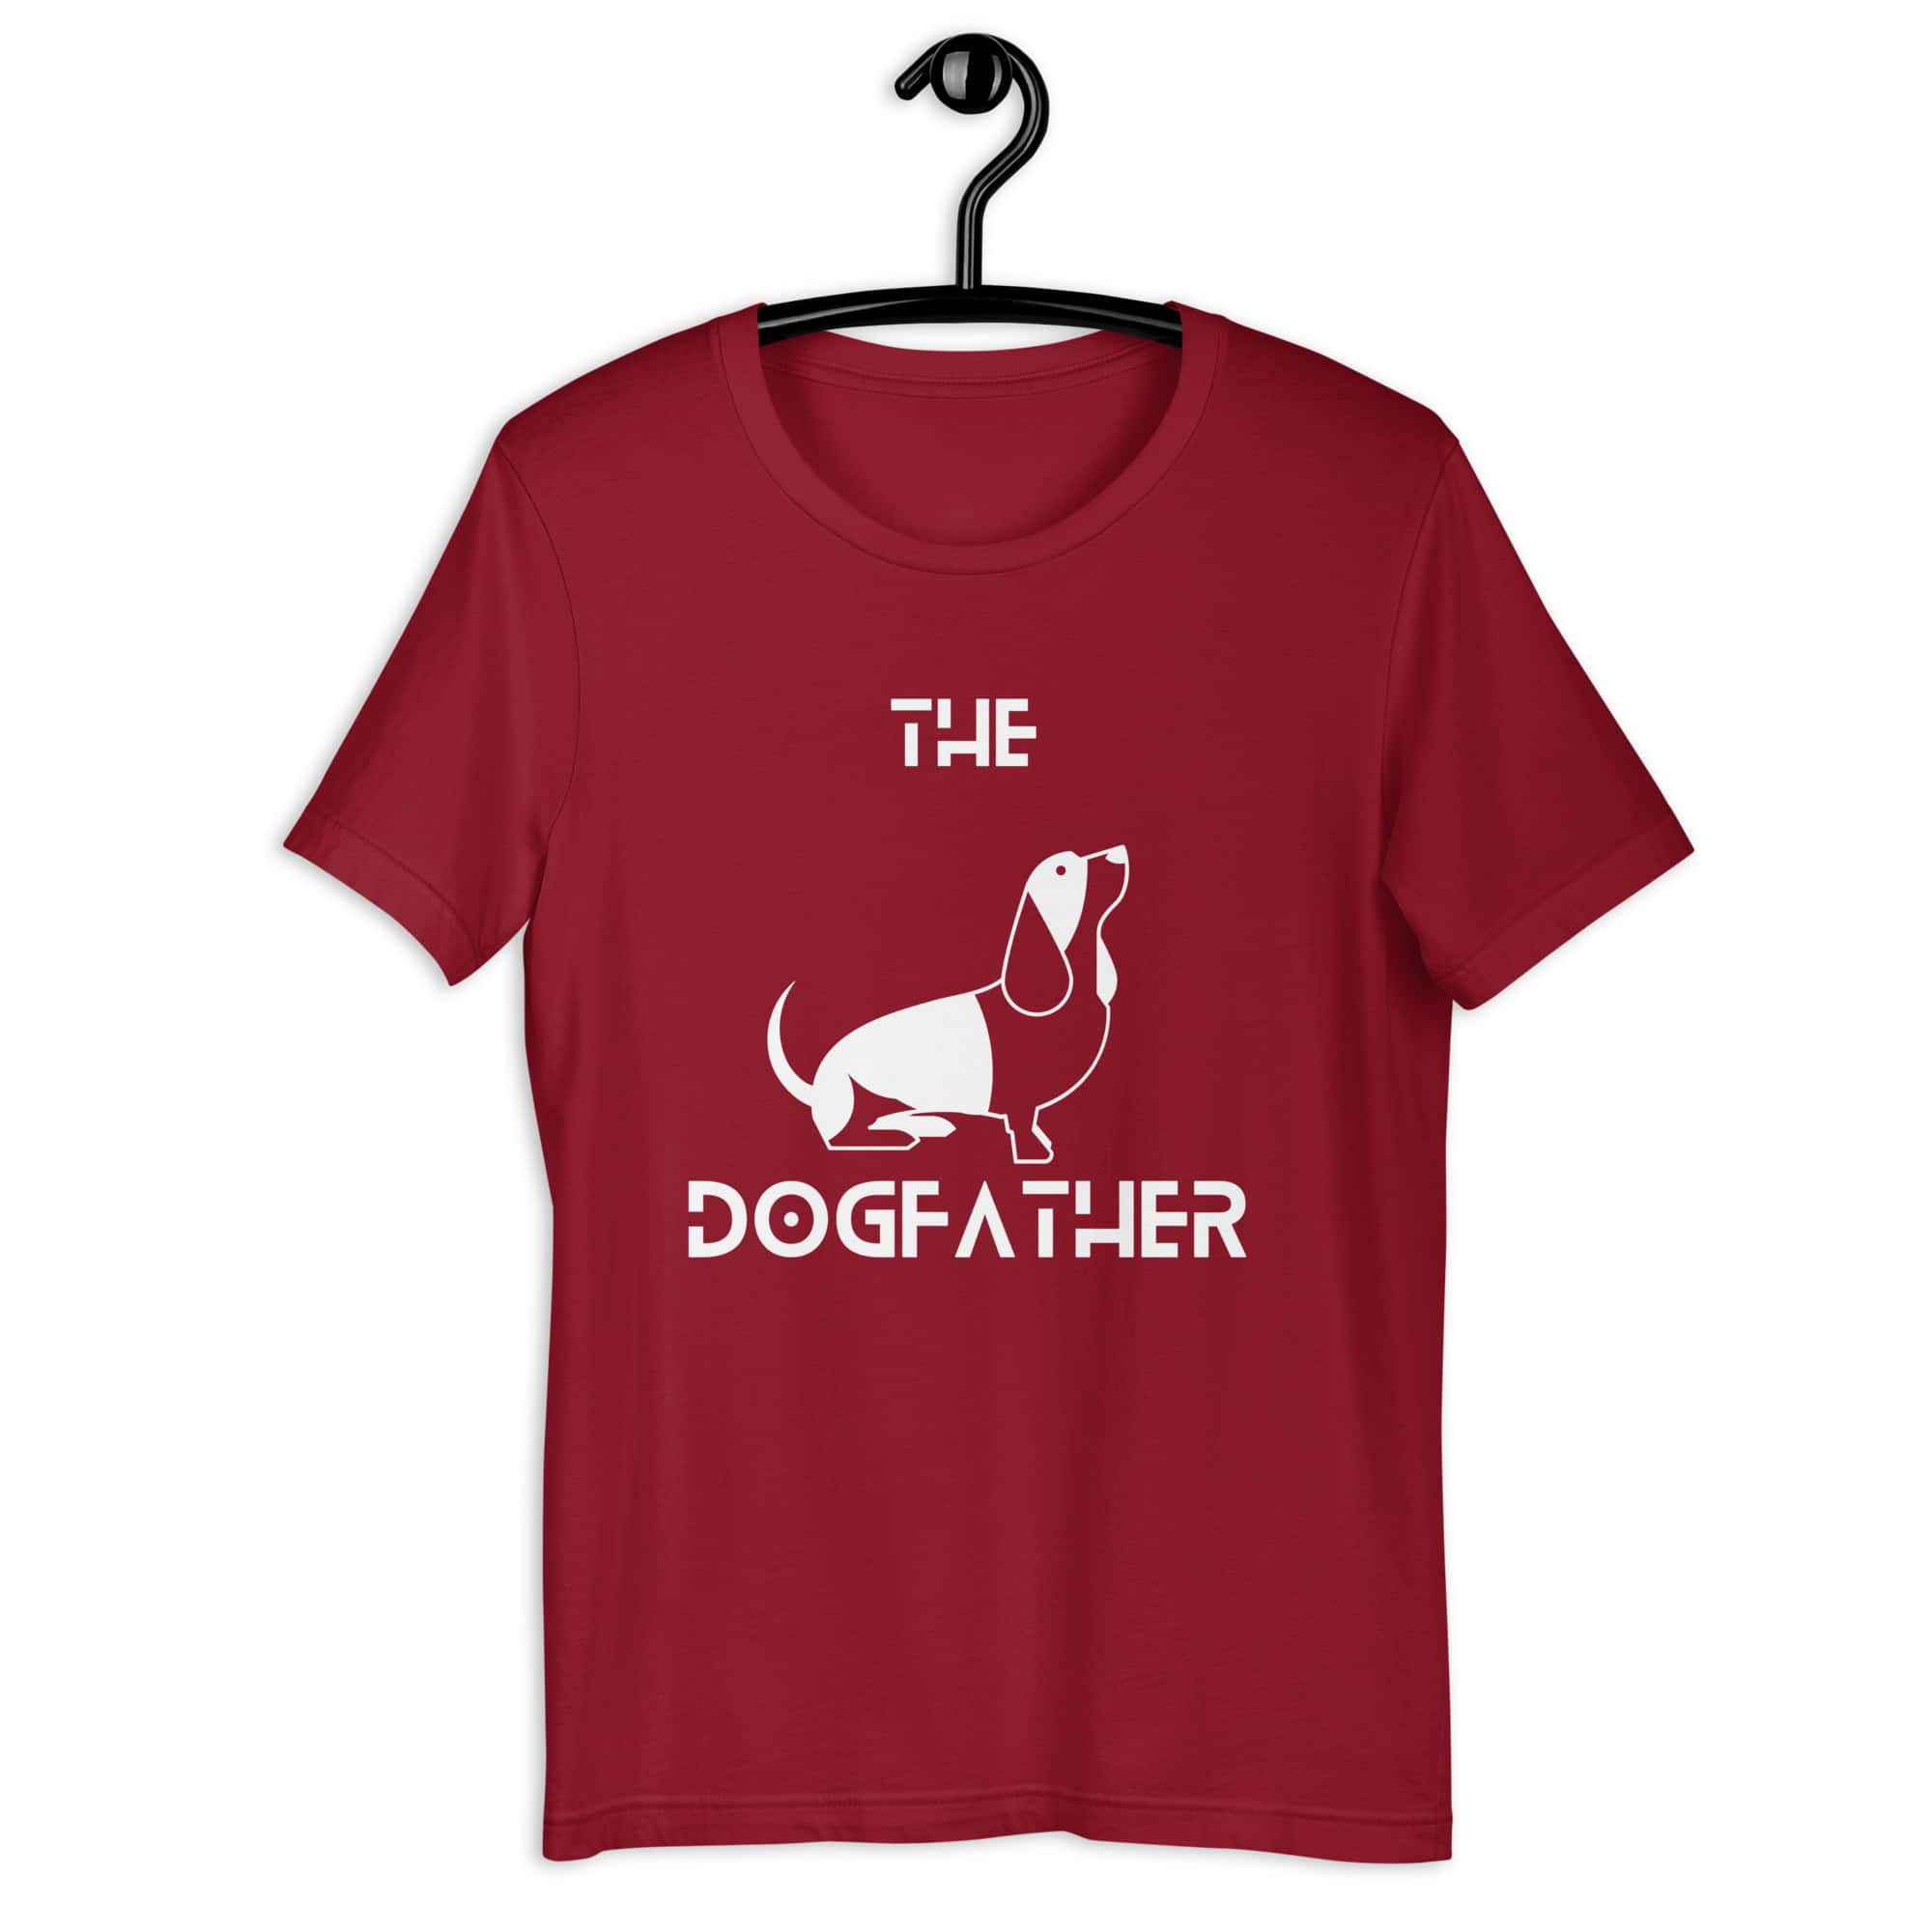 The Dogfather Hounds Unisex T-Shirt. Cardinal